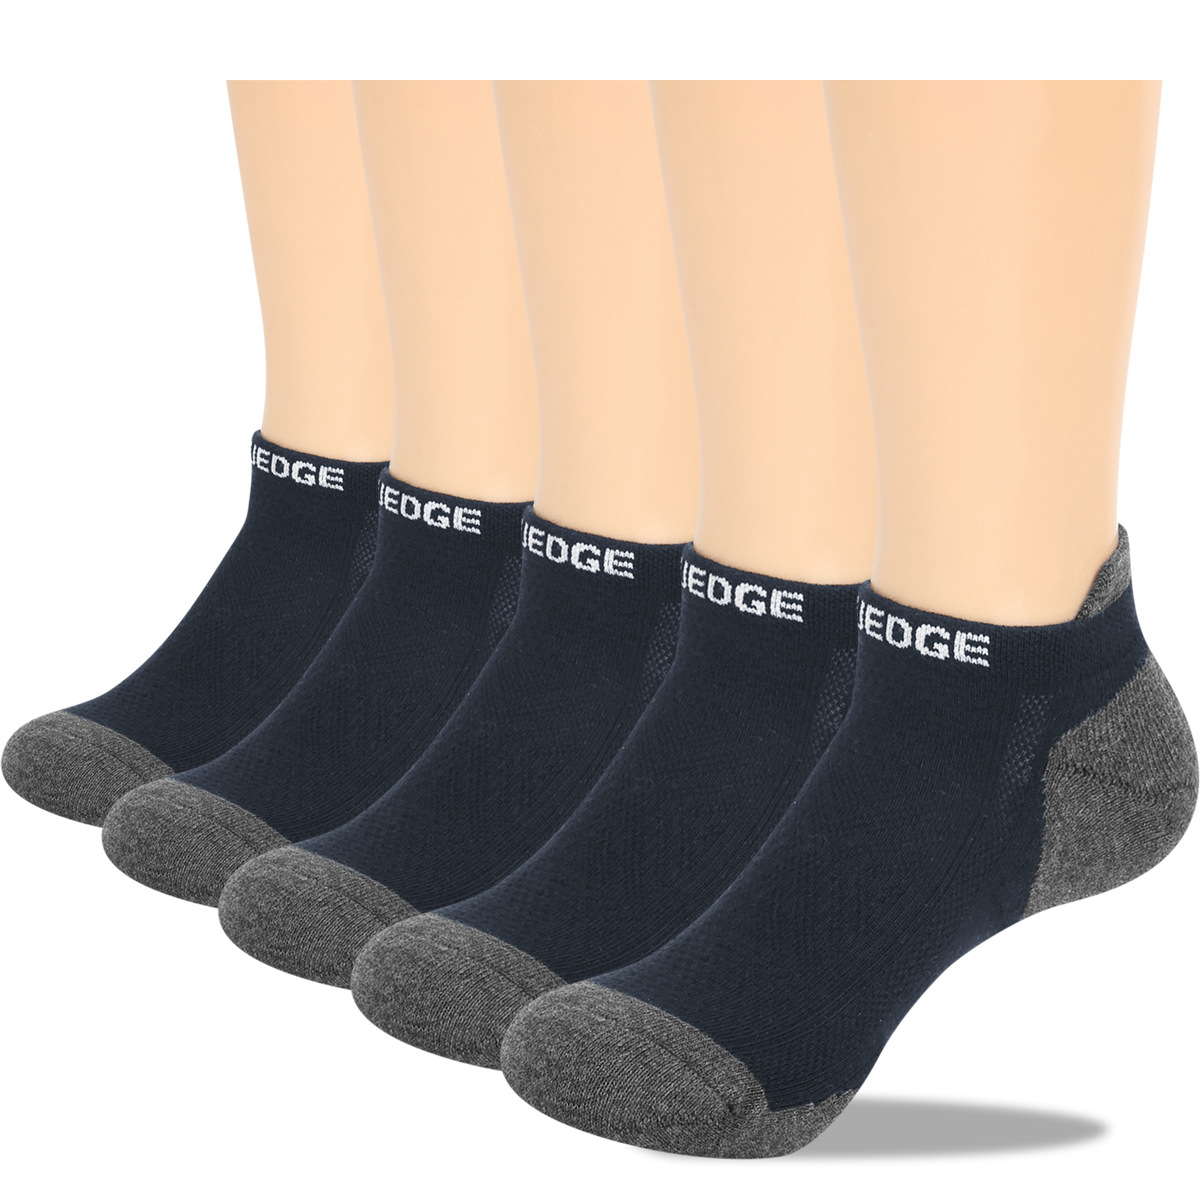 YUEDGE 10 Pairs Combing Cotton Short Running Socks Towel Bottom Ankle Socks Badminton Socks